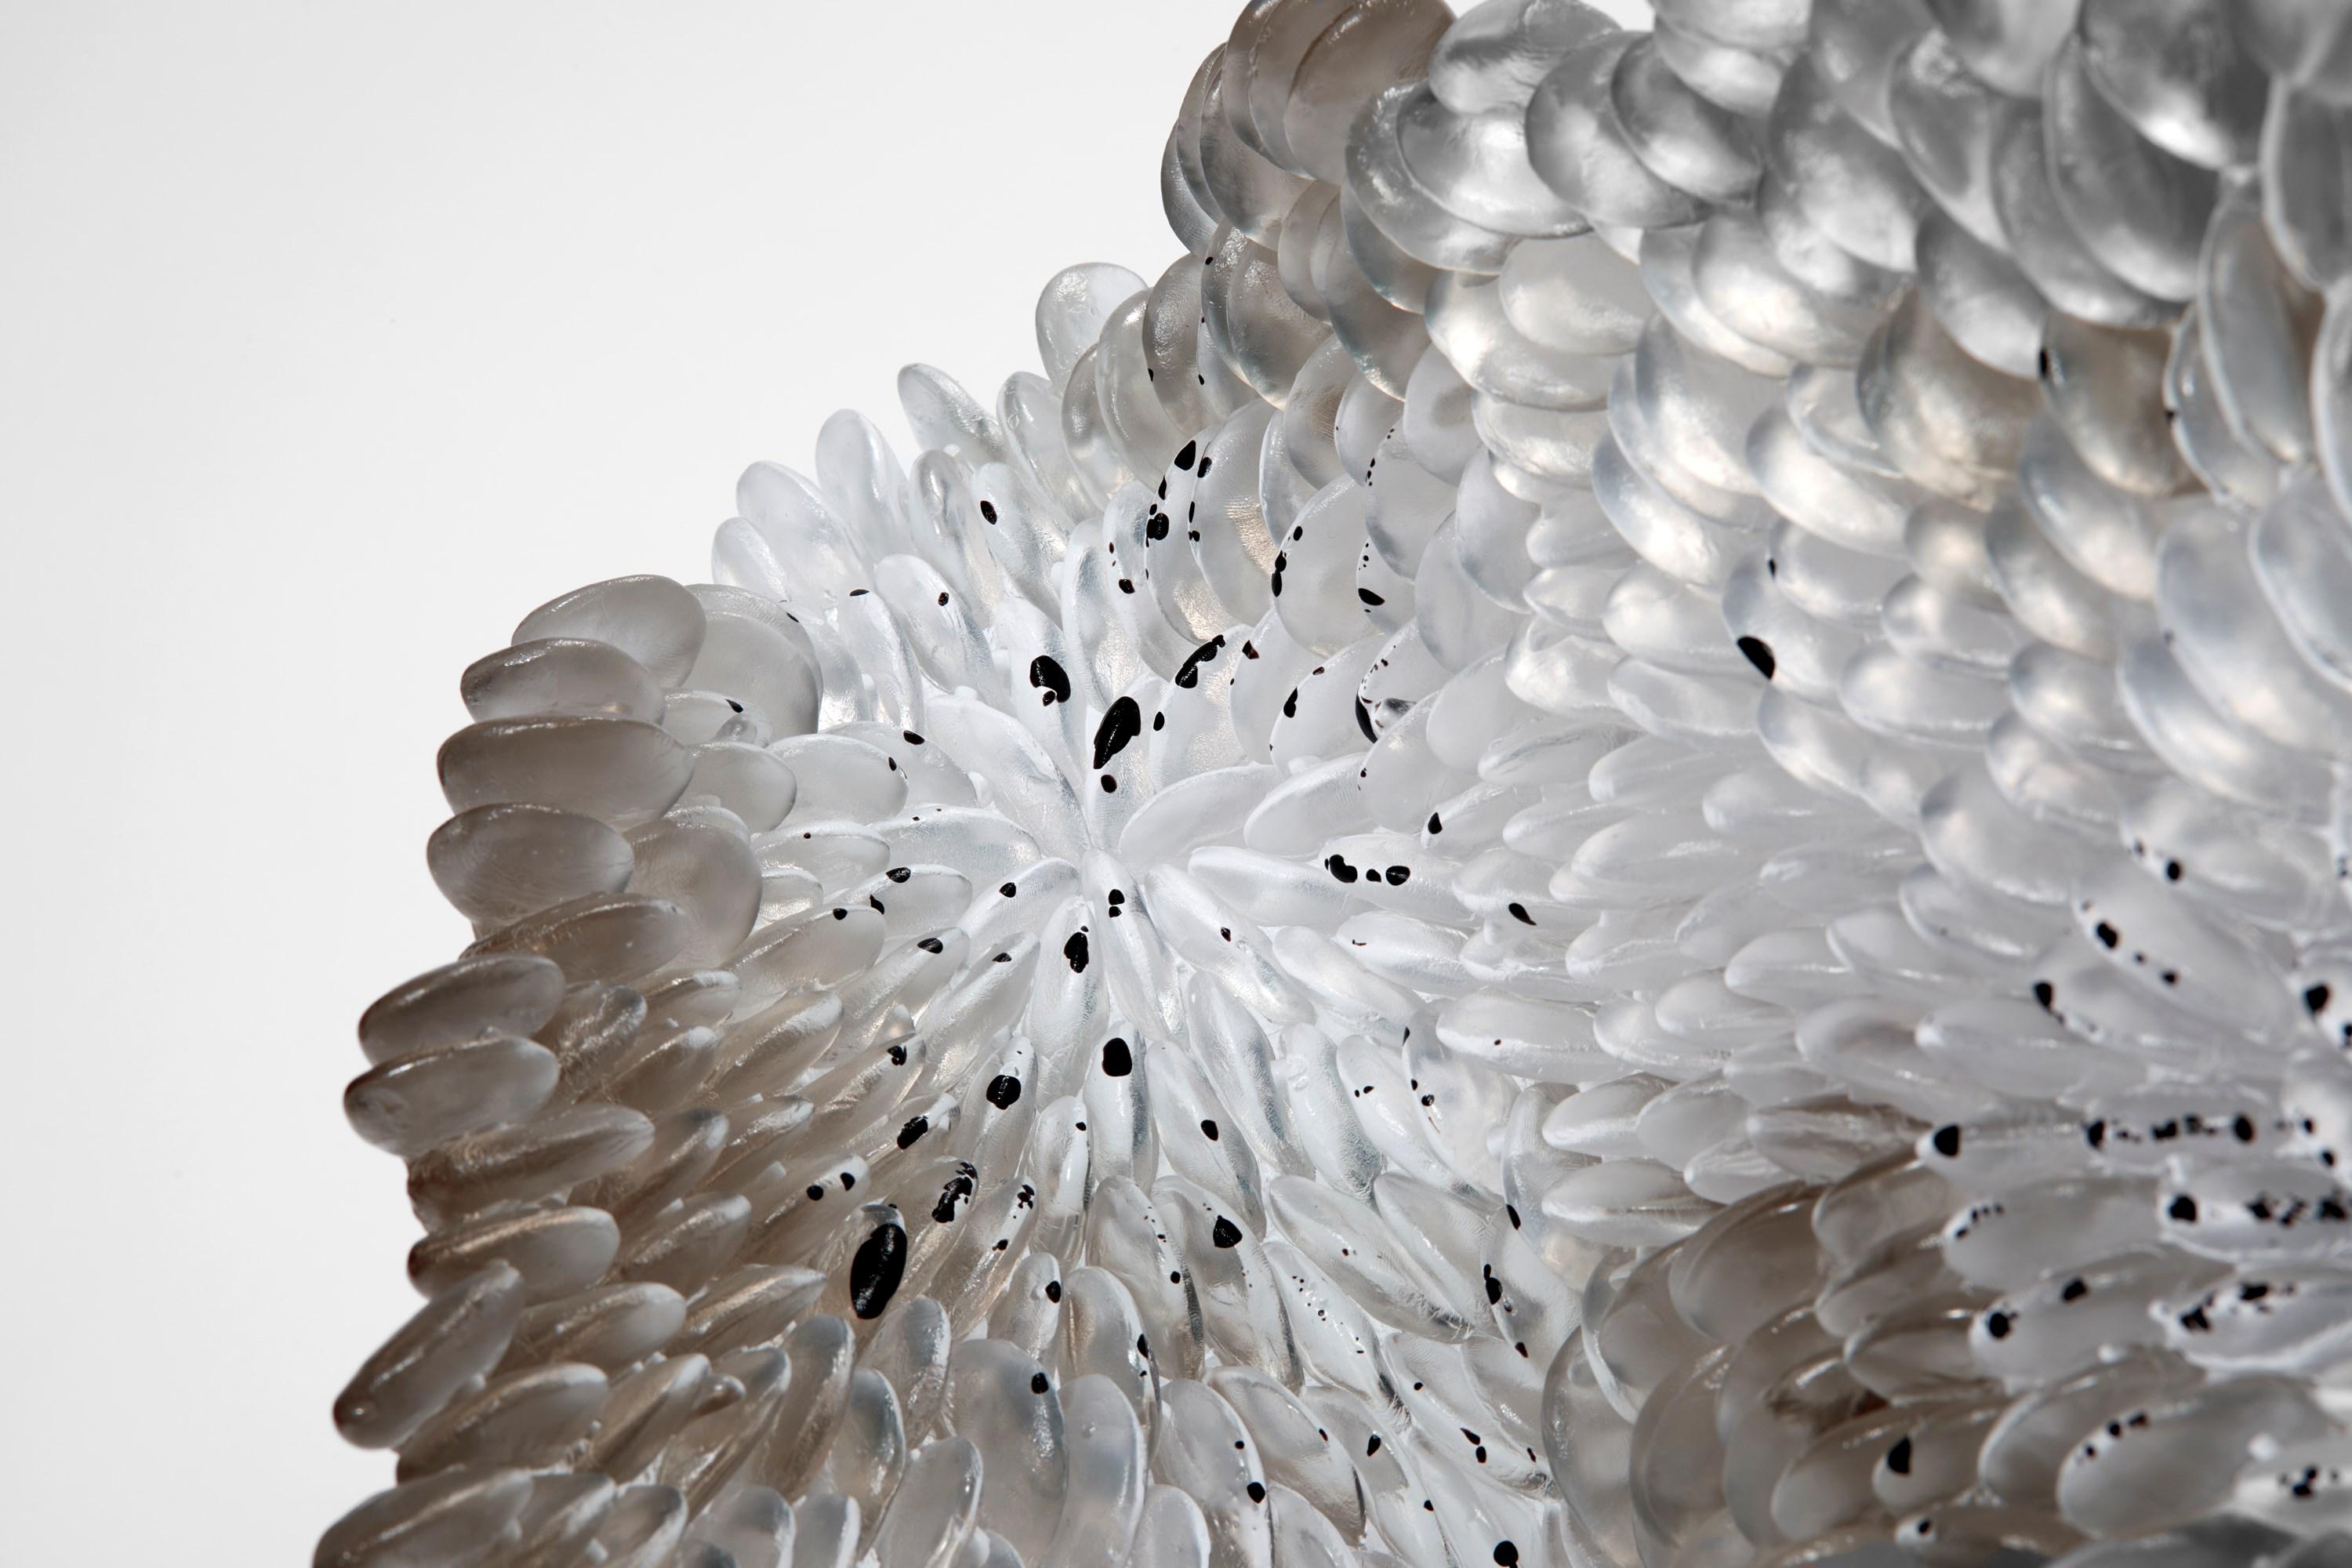 British Speckled Grey, Standing Textured Cast Glass Sculpture by Nina Casson McGarva